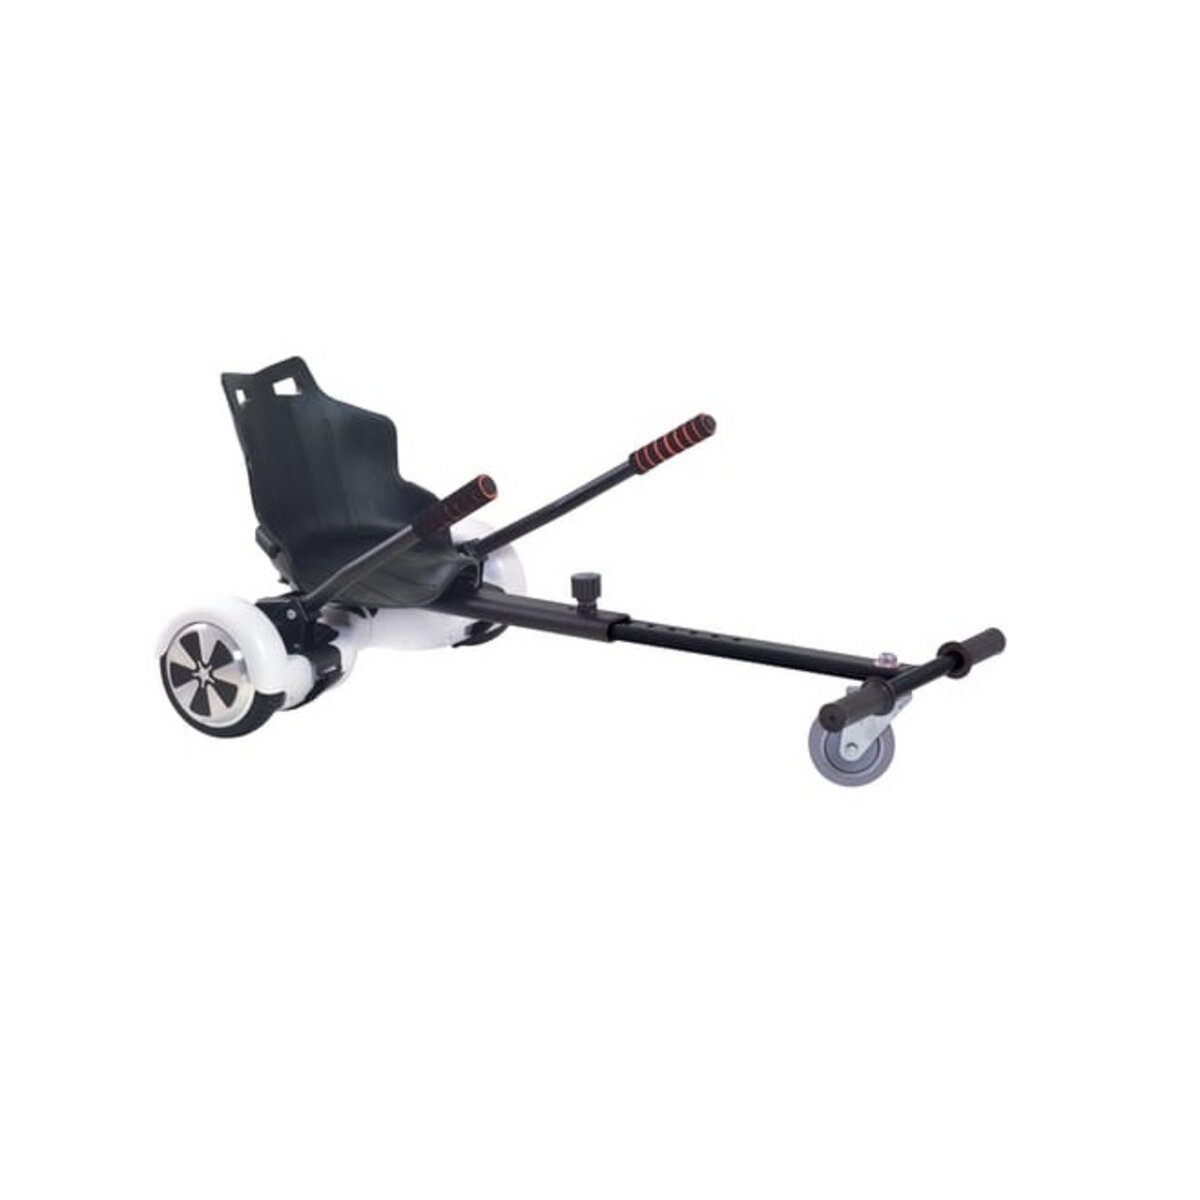 CDTS Kart Hoverboard avec siège - 6,5 pouces - Noir